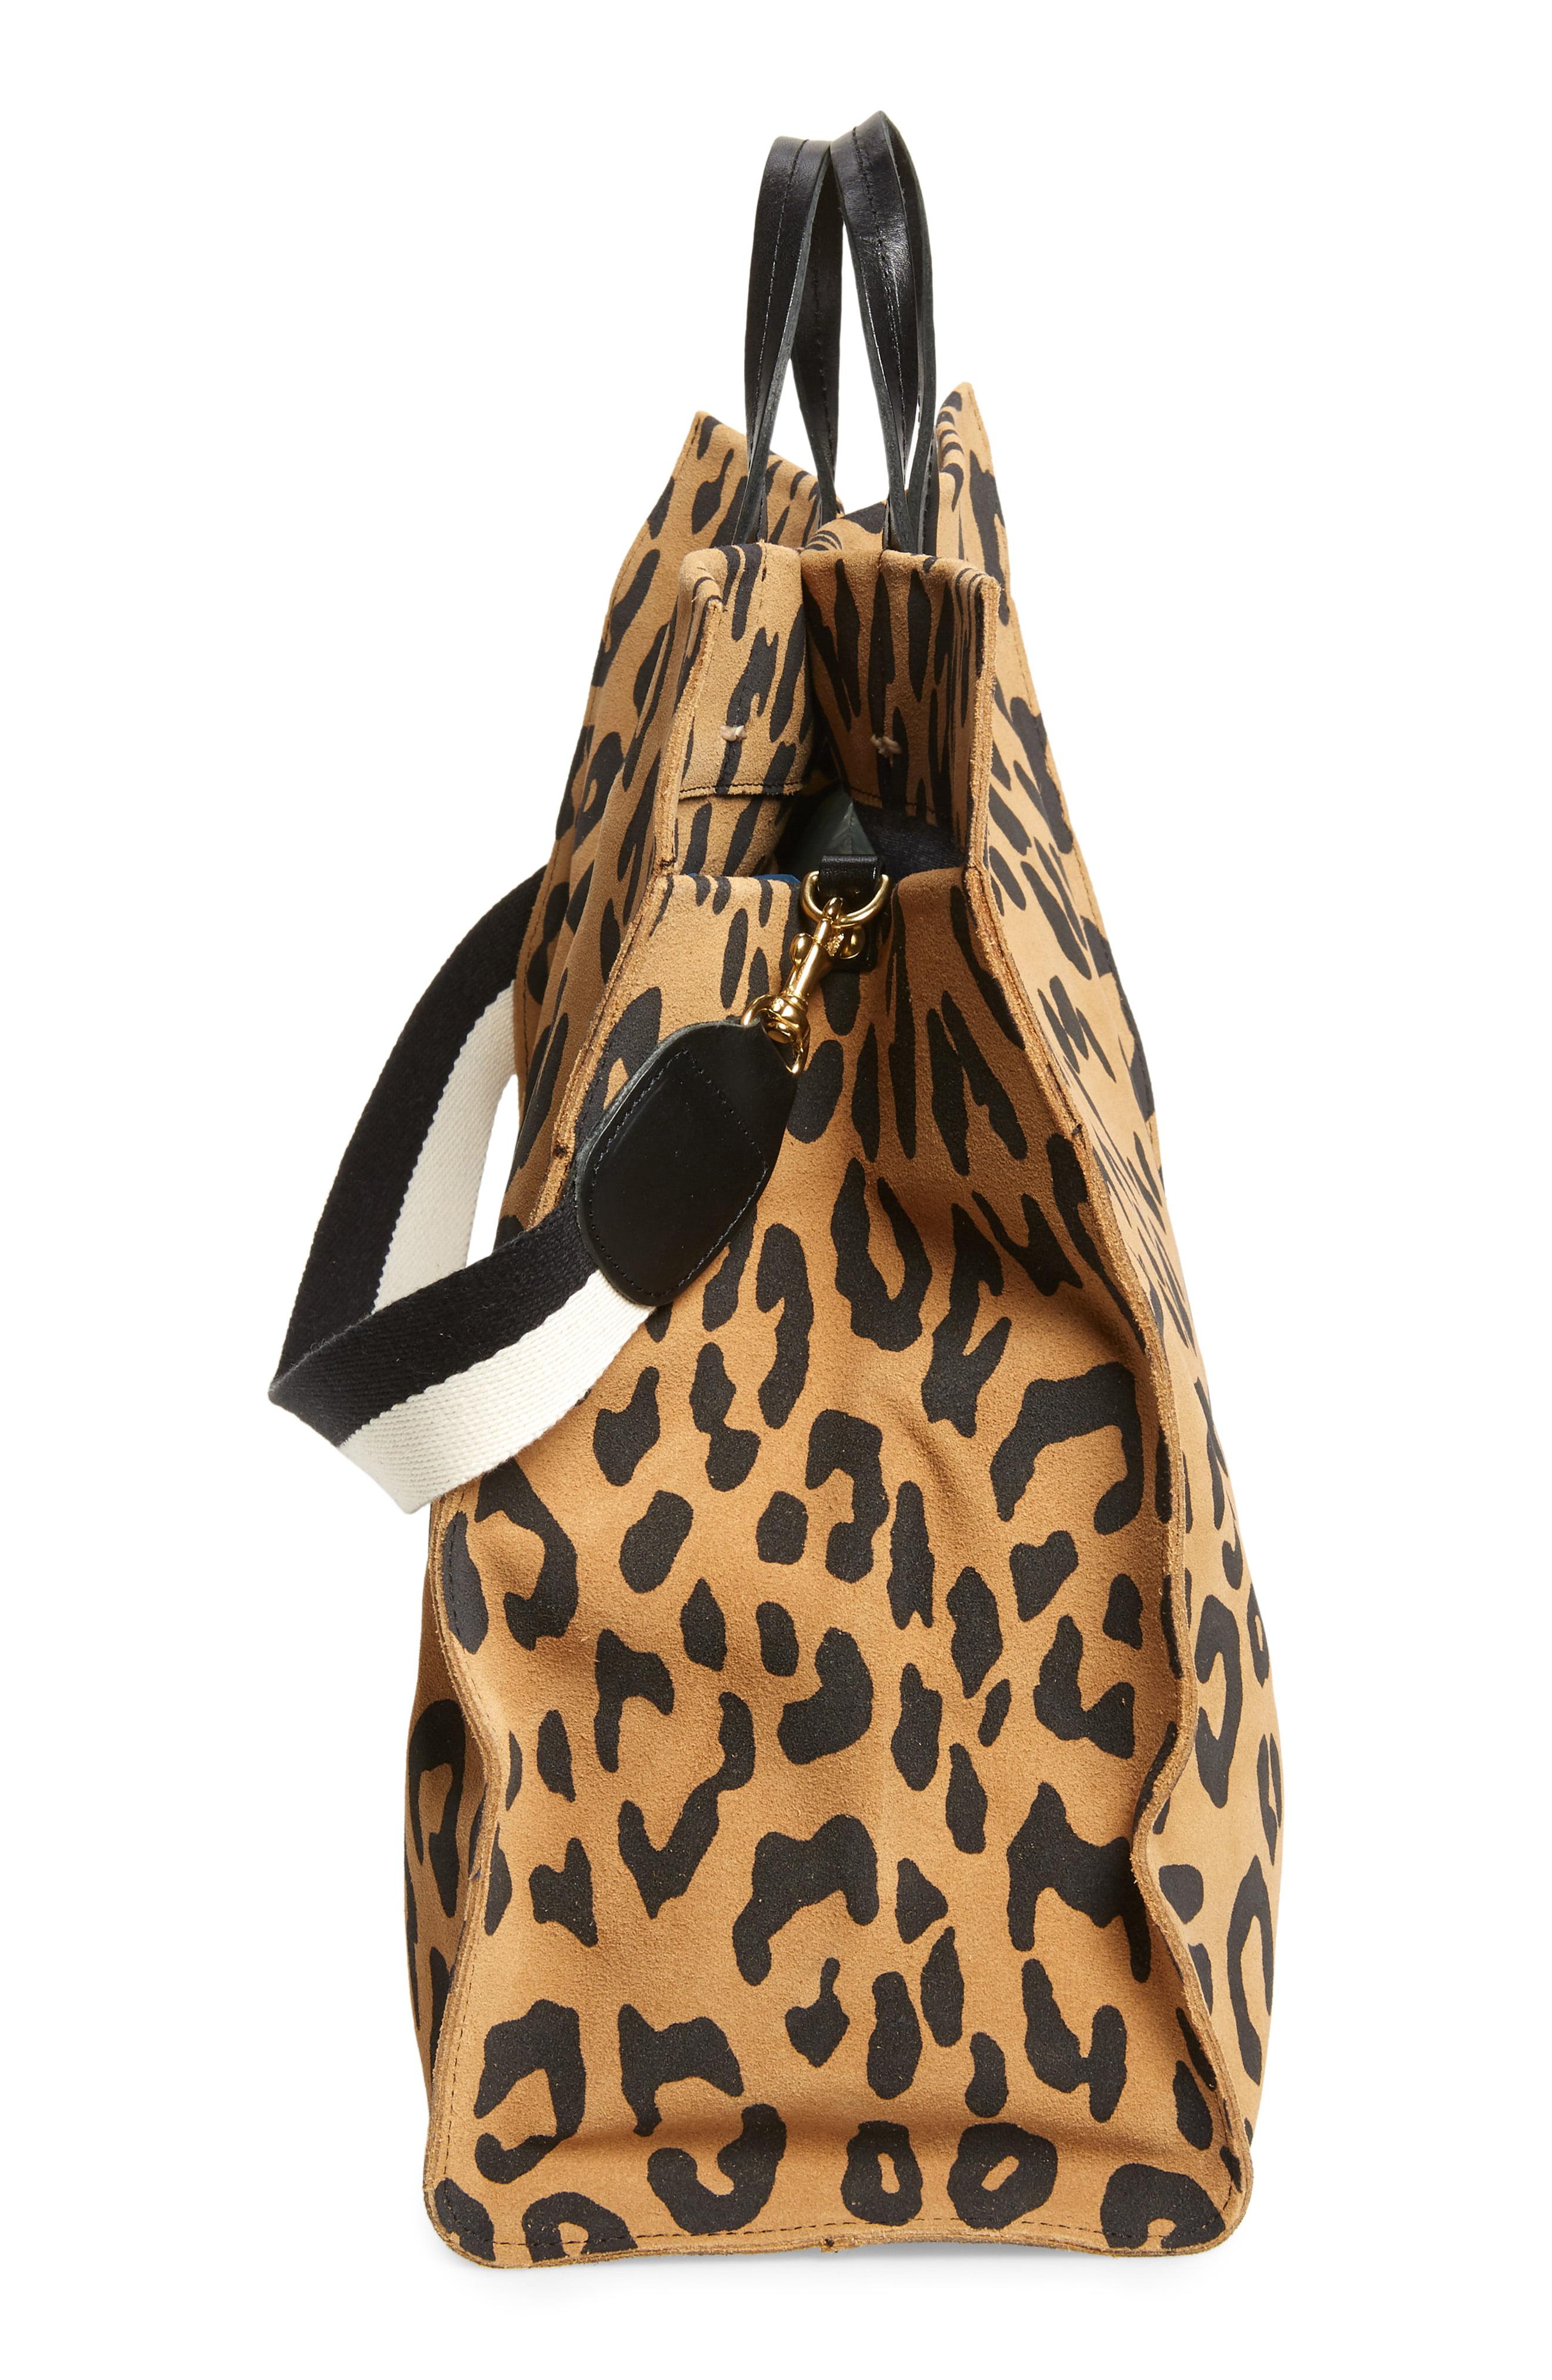 Leopard Sandrine Bag by Clare V. for $75